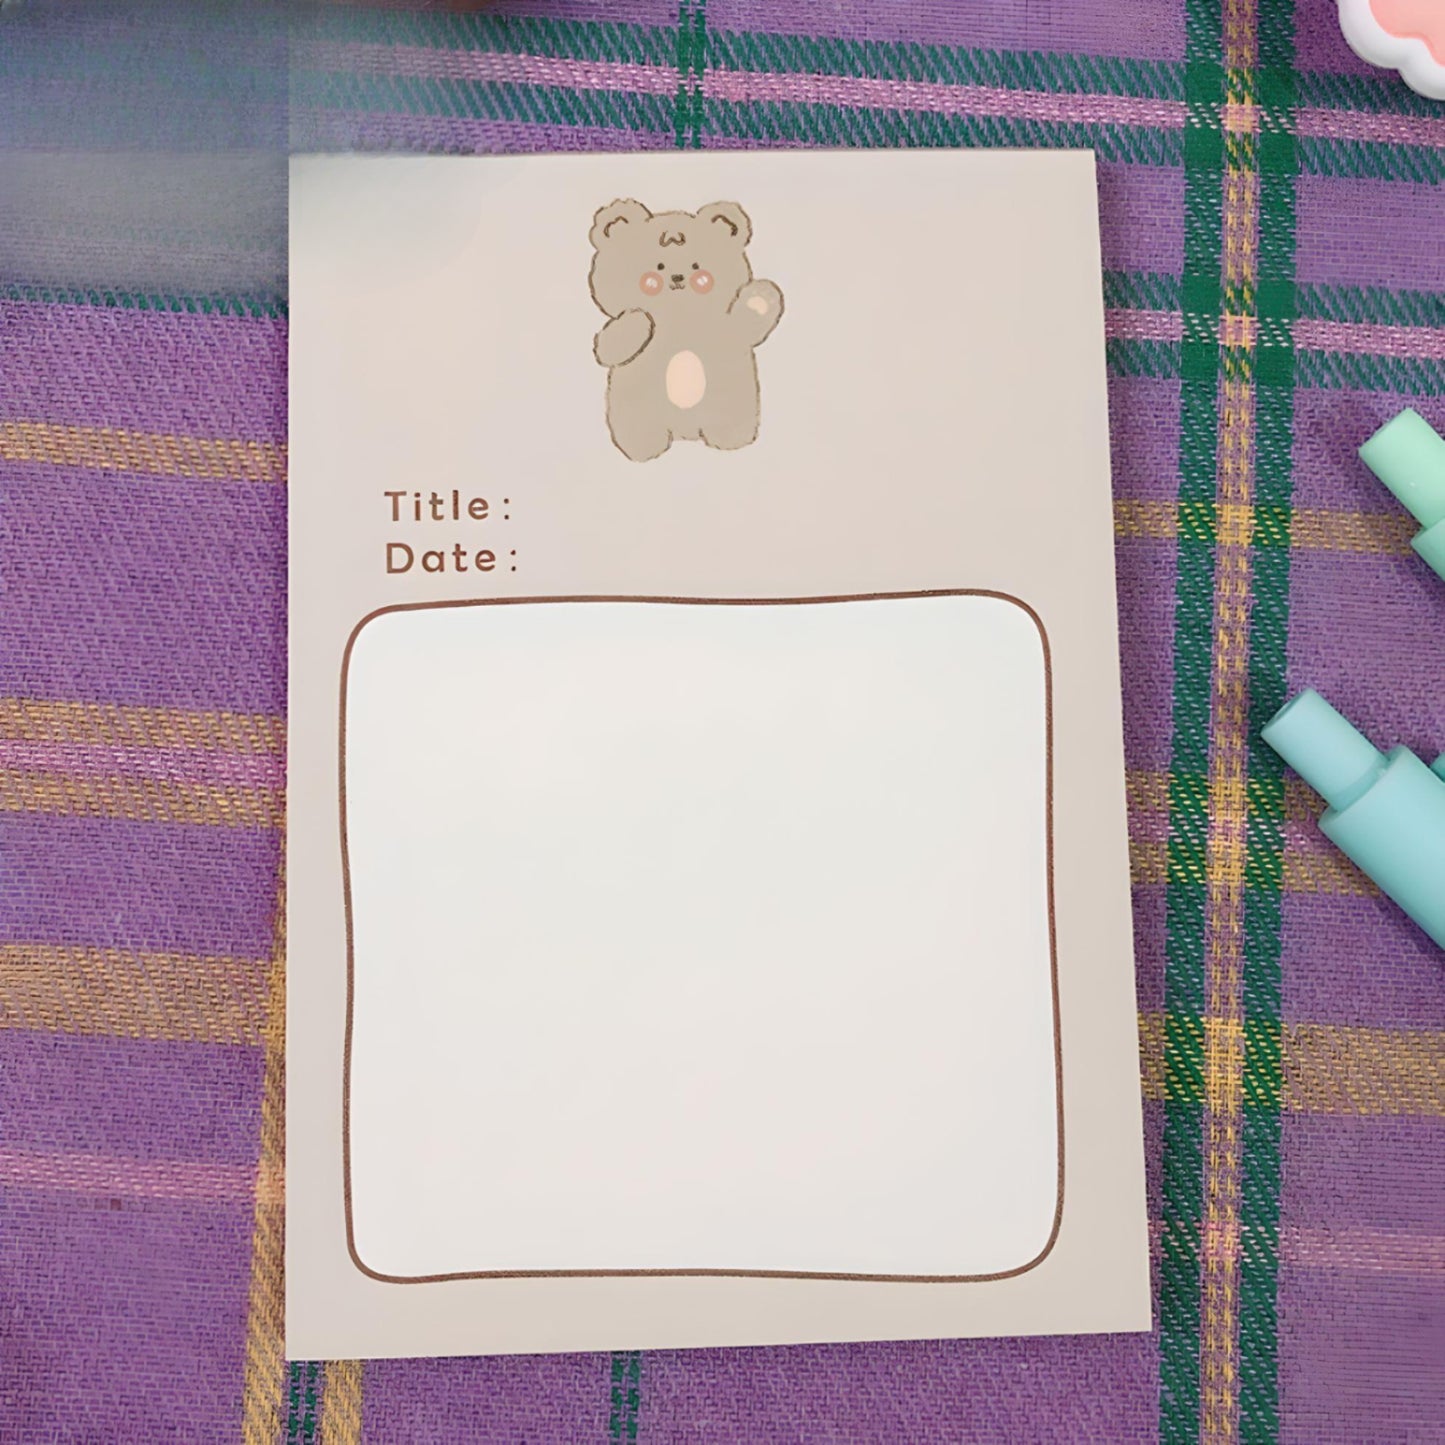 Kawaii bear sticky notes on a purple tablecloth